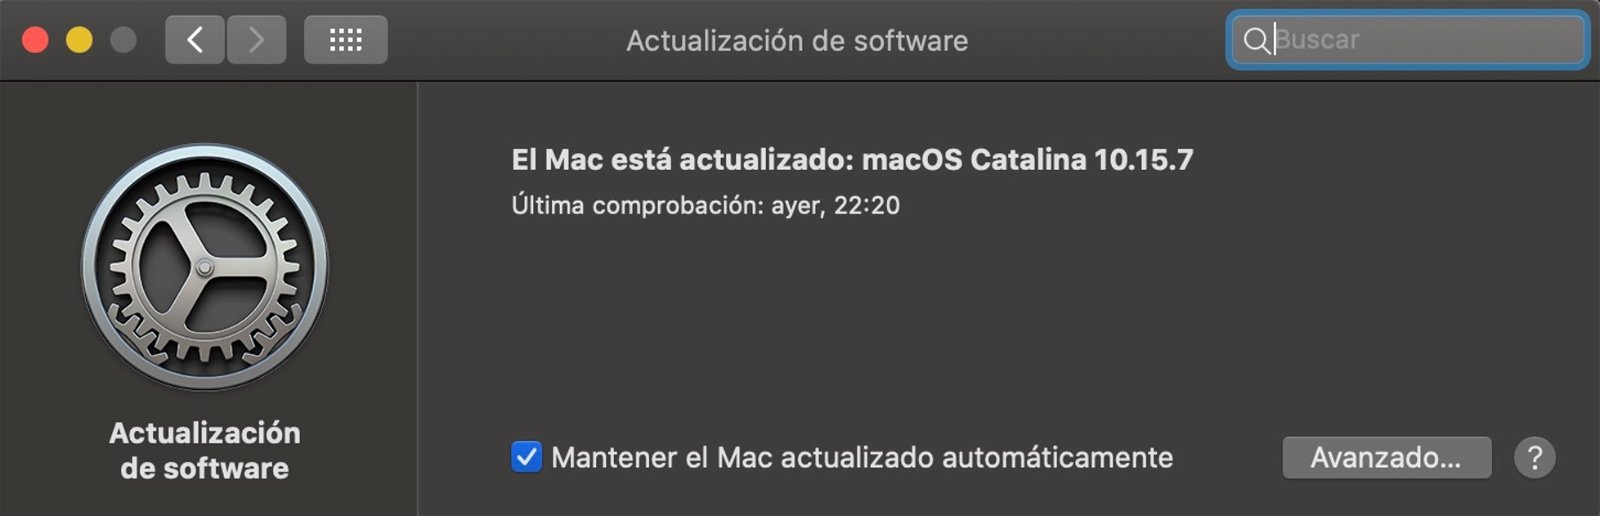 Actualiaciones de un Mac